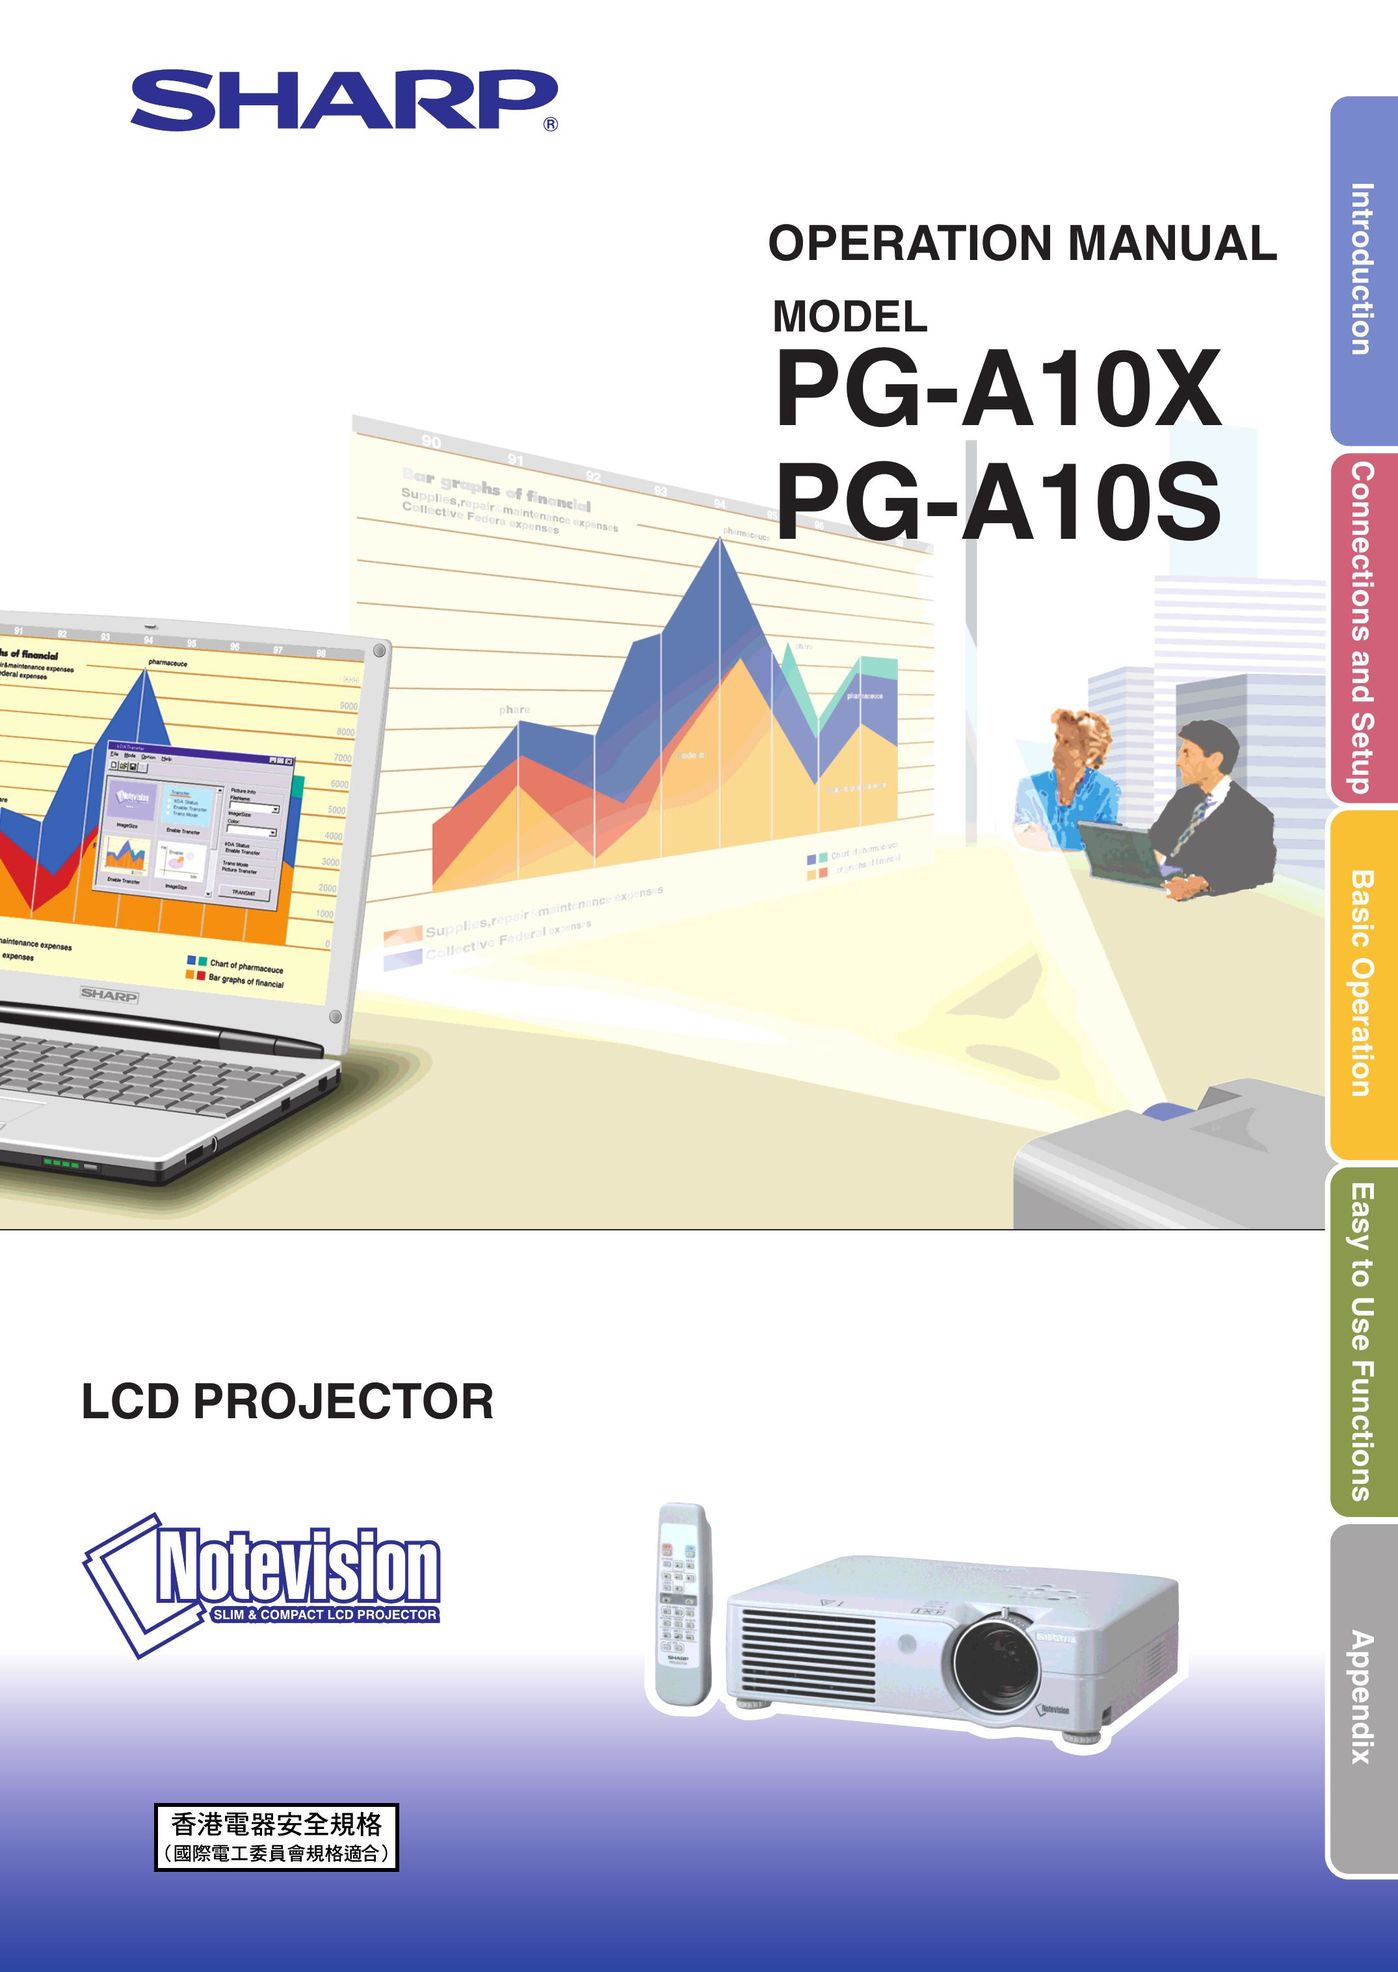 Sharp PG-A10X Projector User Manual